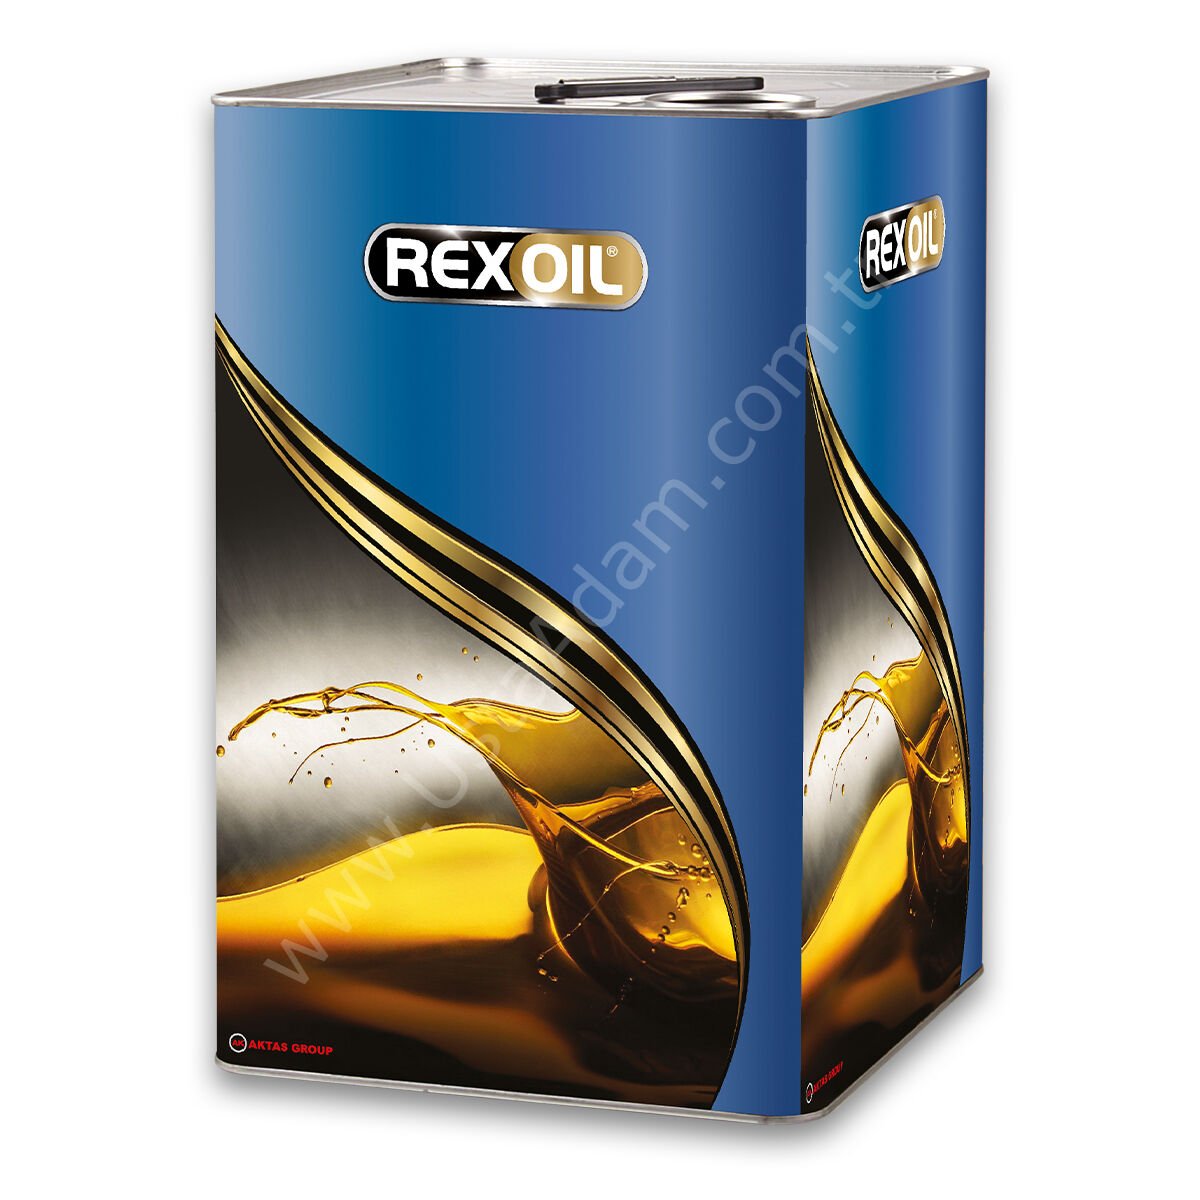 REXOIL Mineral Bor Yağı - 14 KG